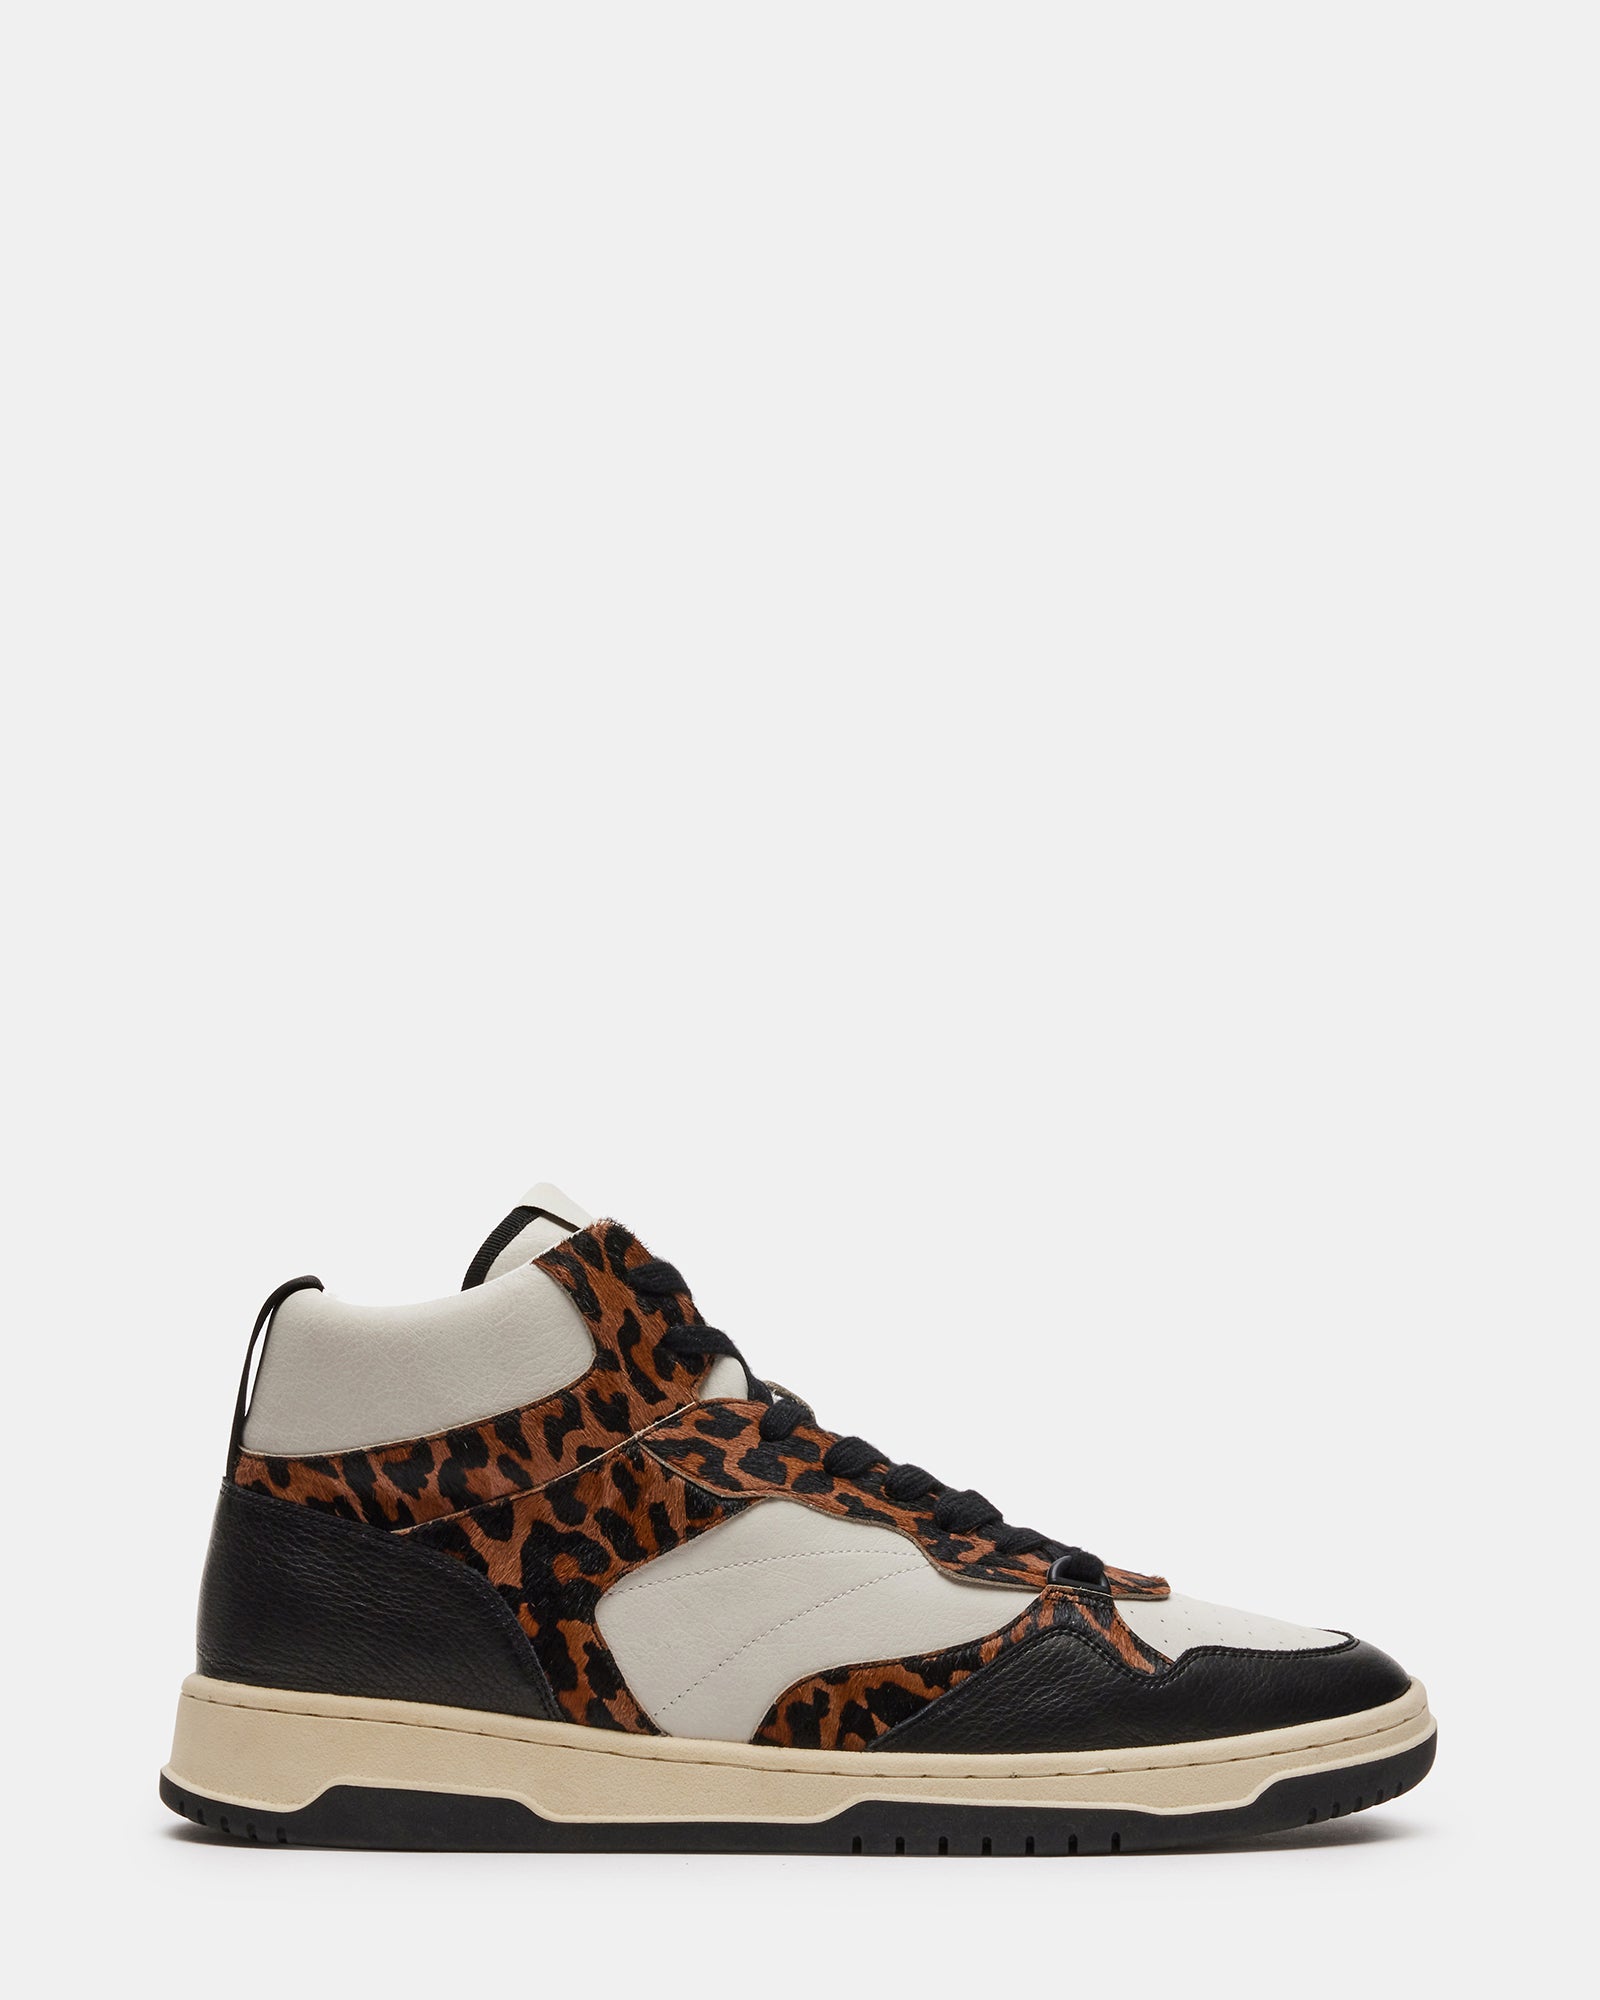 adidas Originals Stan Smith Leopard Printed Sneakers in Black | Lyst UK